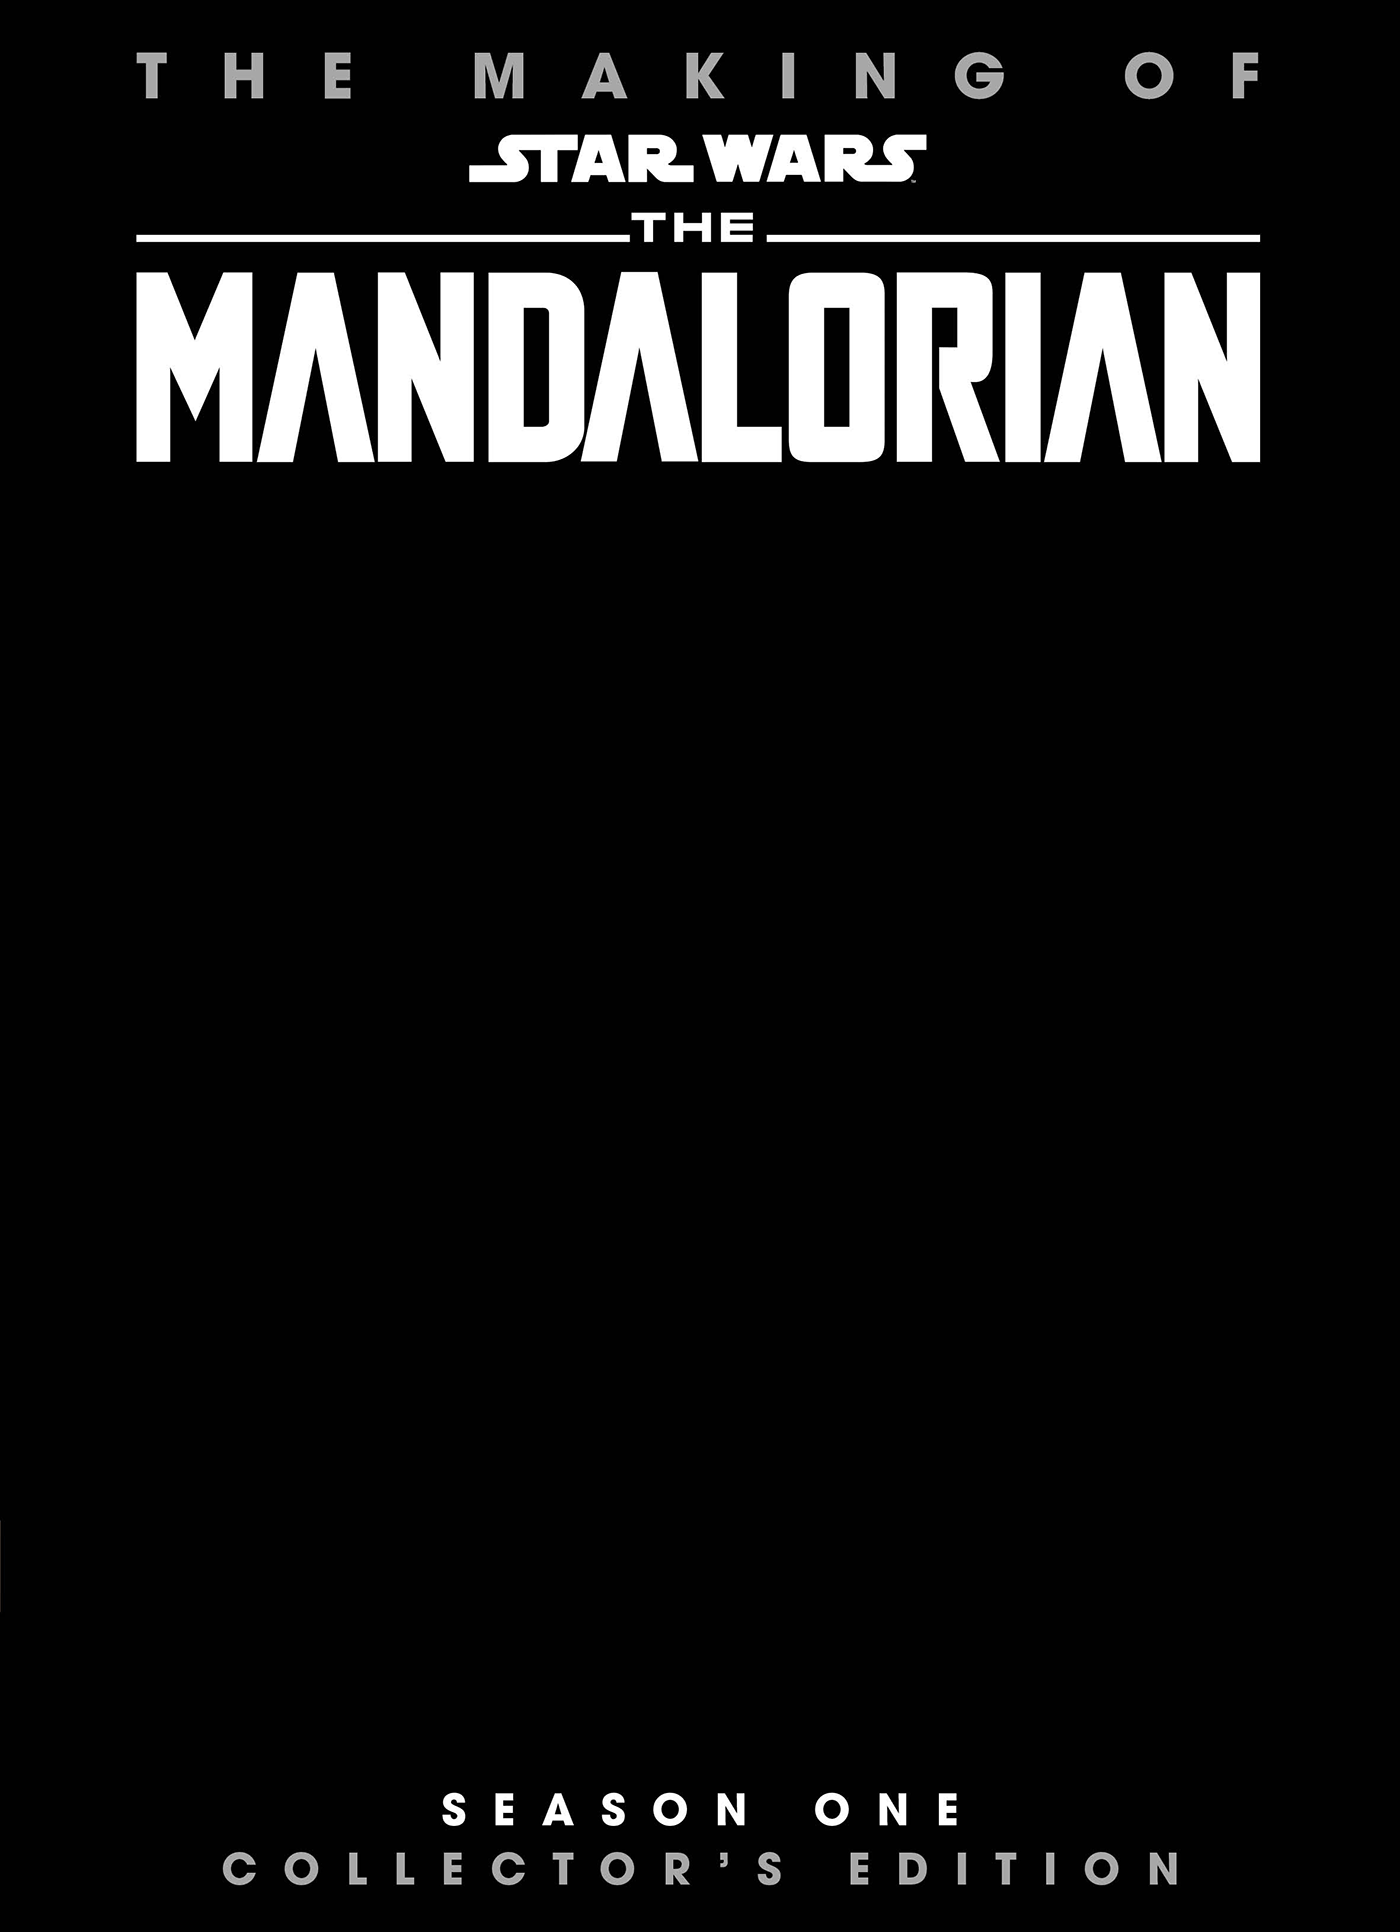 Plik:The Mandalorian Season One solicitation cover.png